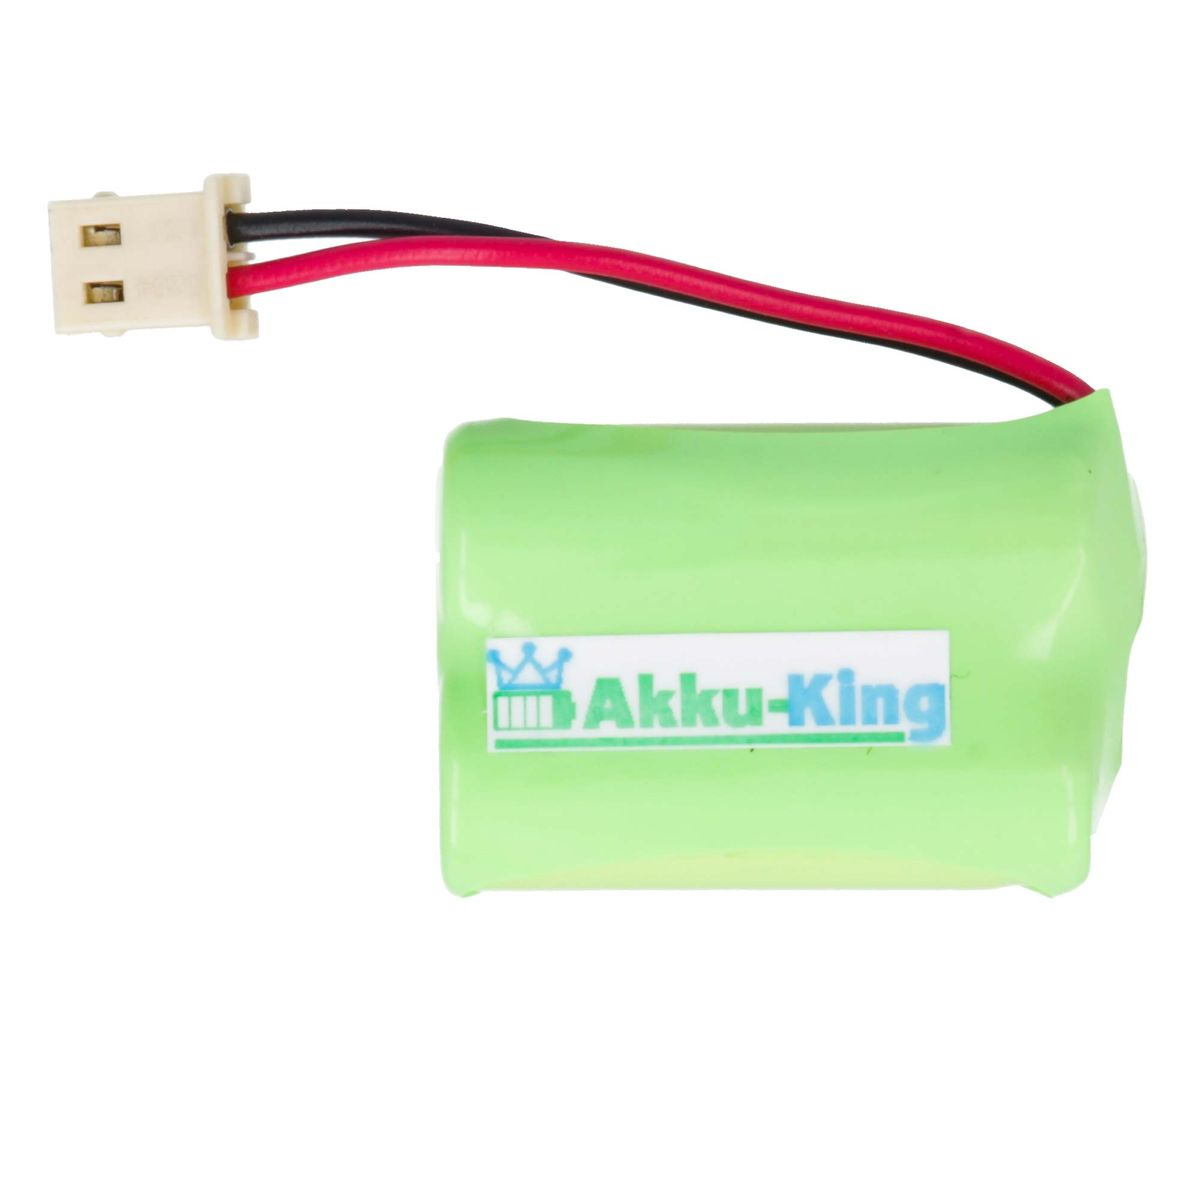 AKKU-KING Akku BY1131 mit 2.4 Ni-MH Volt, 300mAh Motorola Geräte-Akku, kompatibel